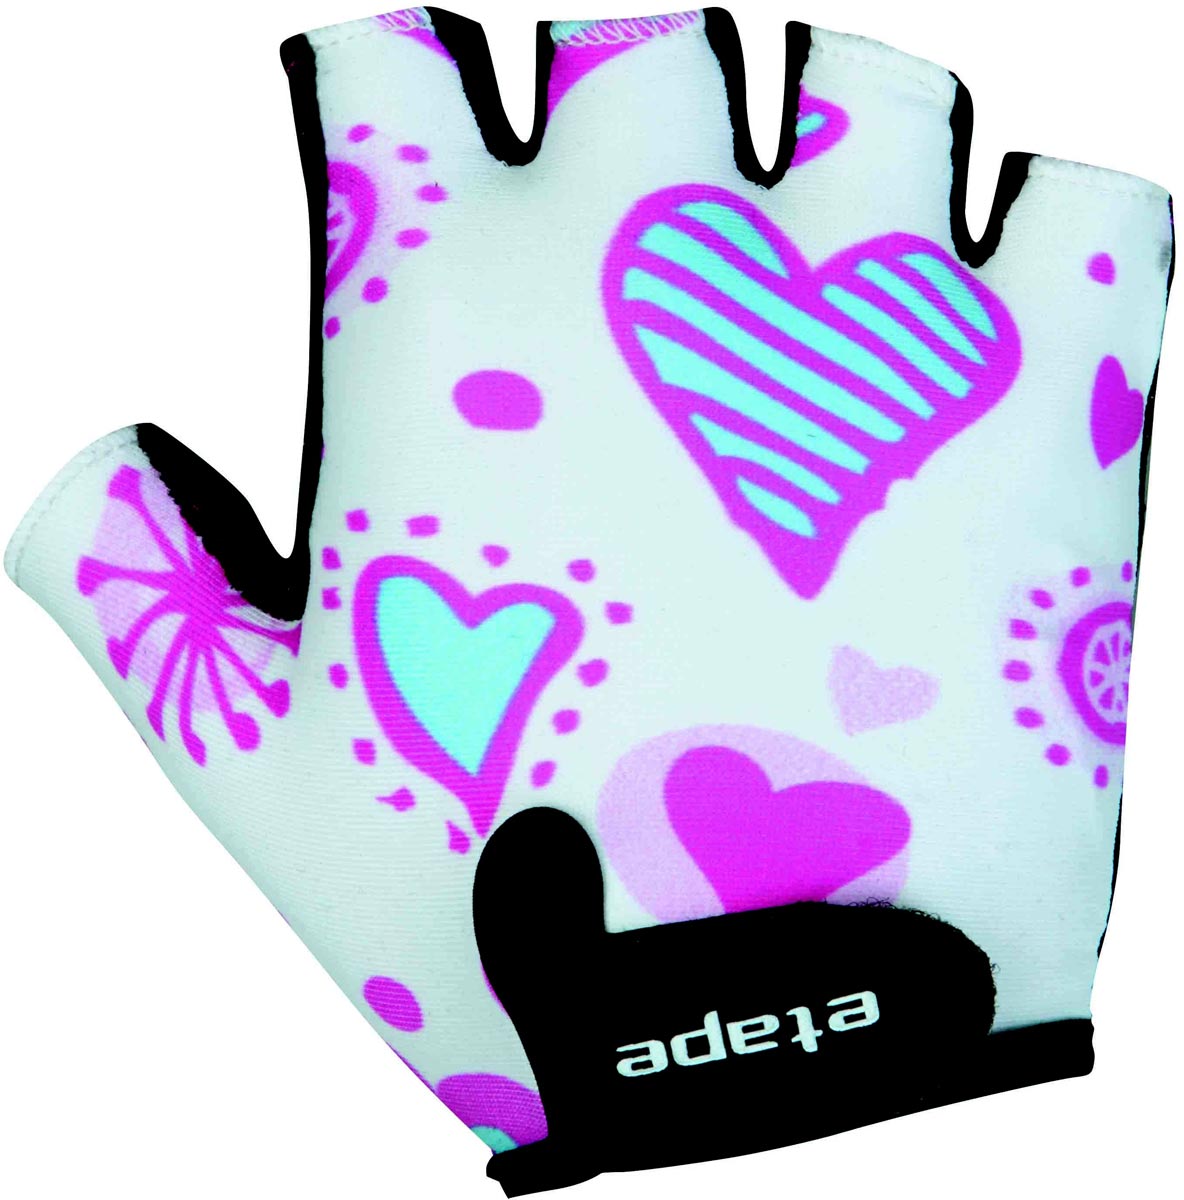 REX - Kid's cycling gloves